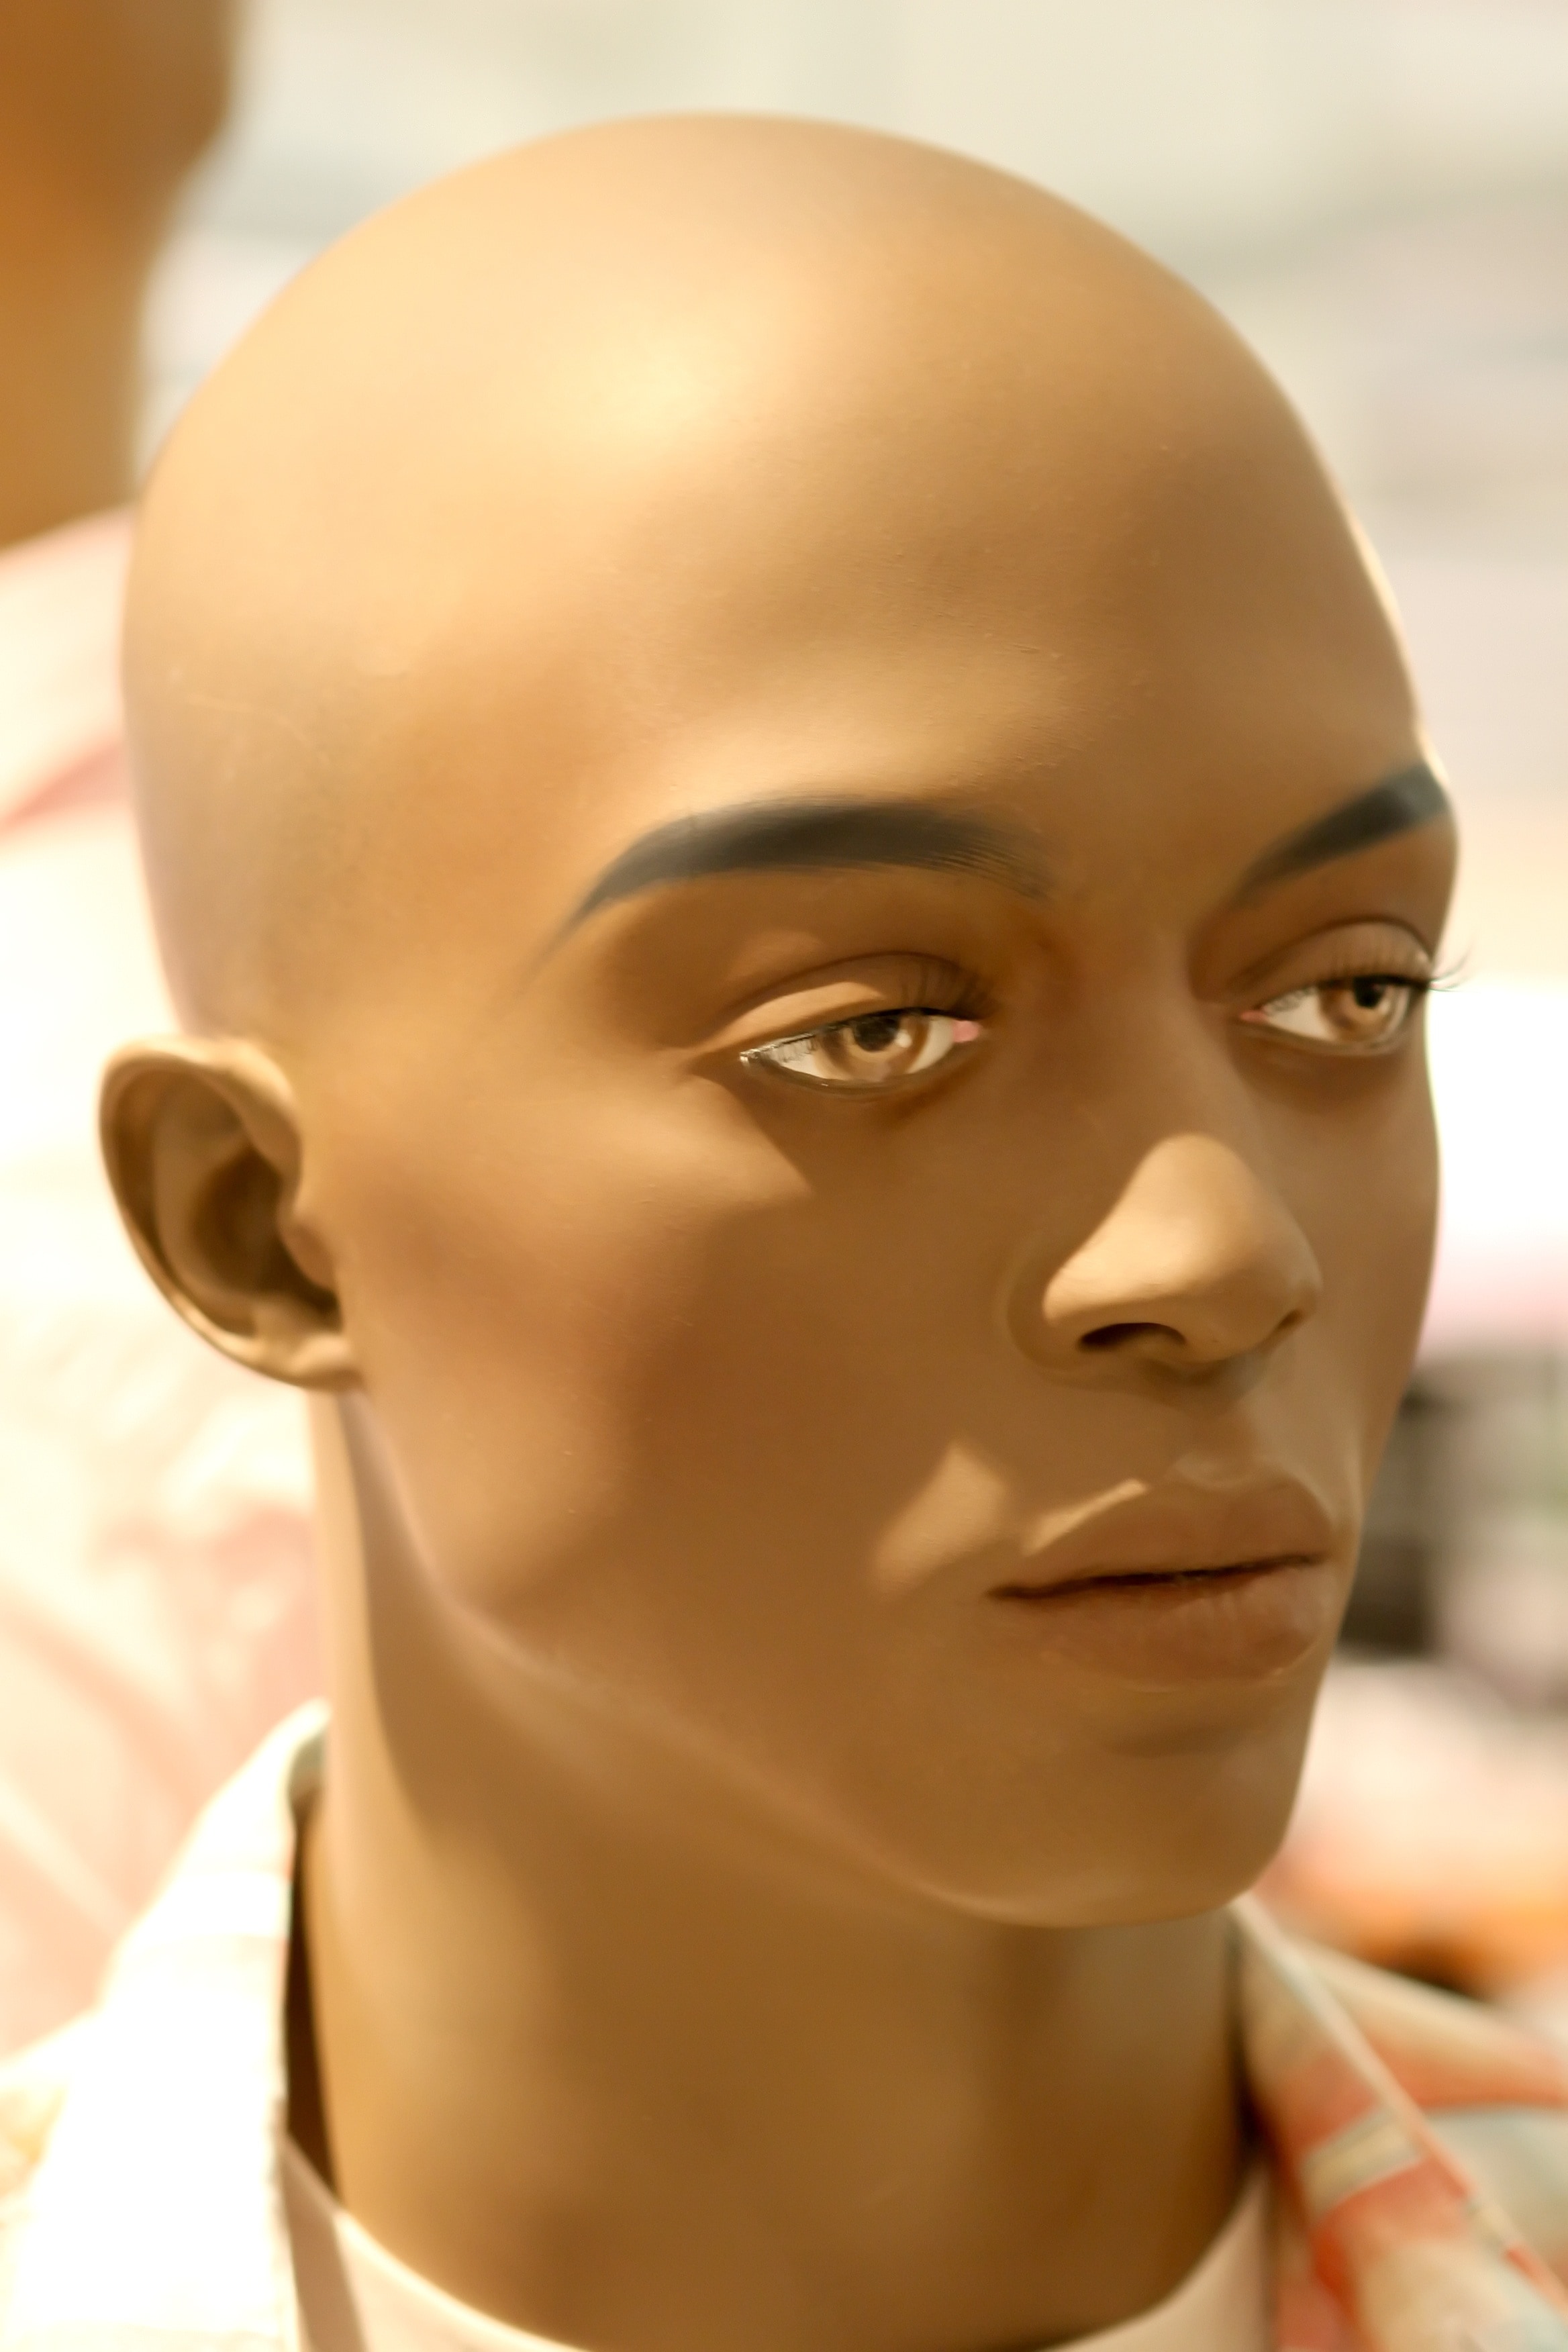 Bald, Black, African, Balding, Boutique, human face, human head